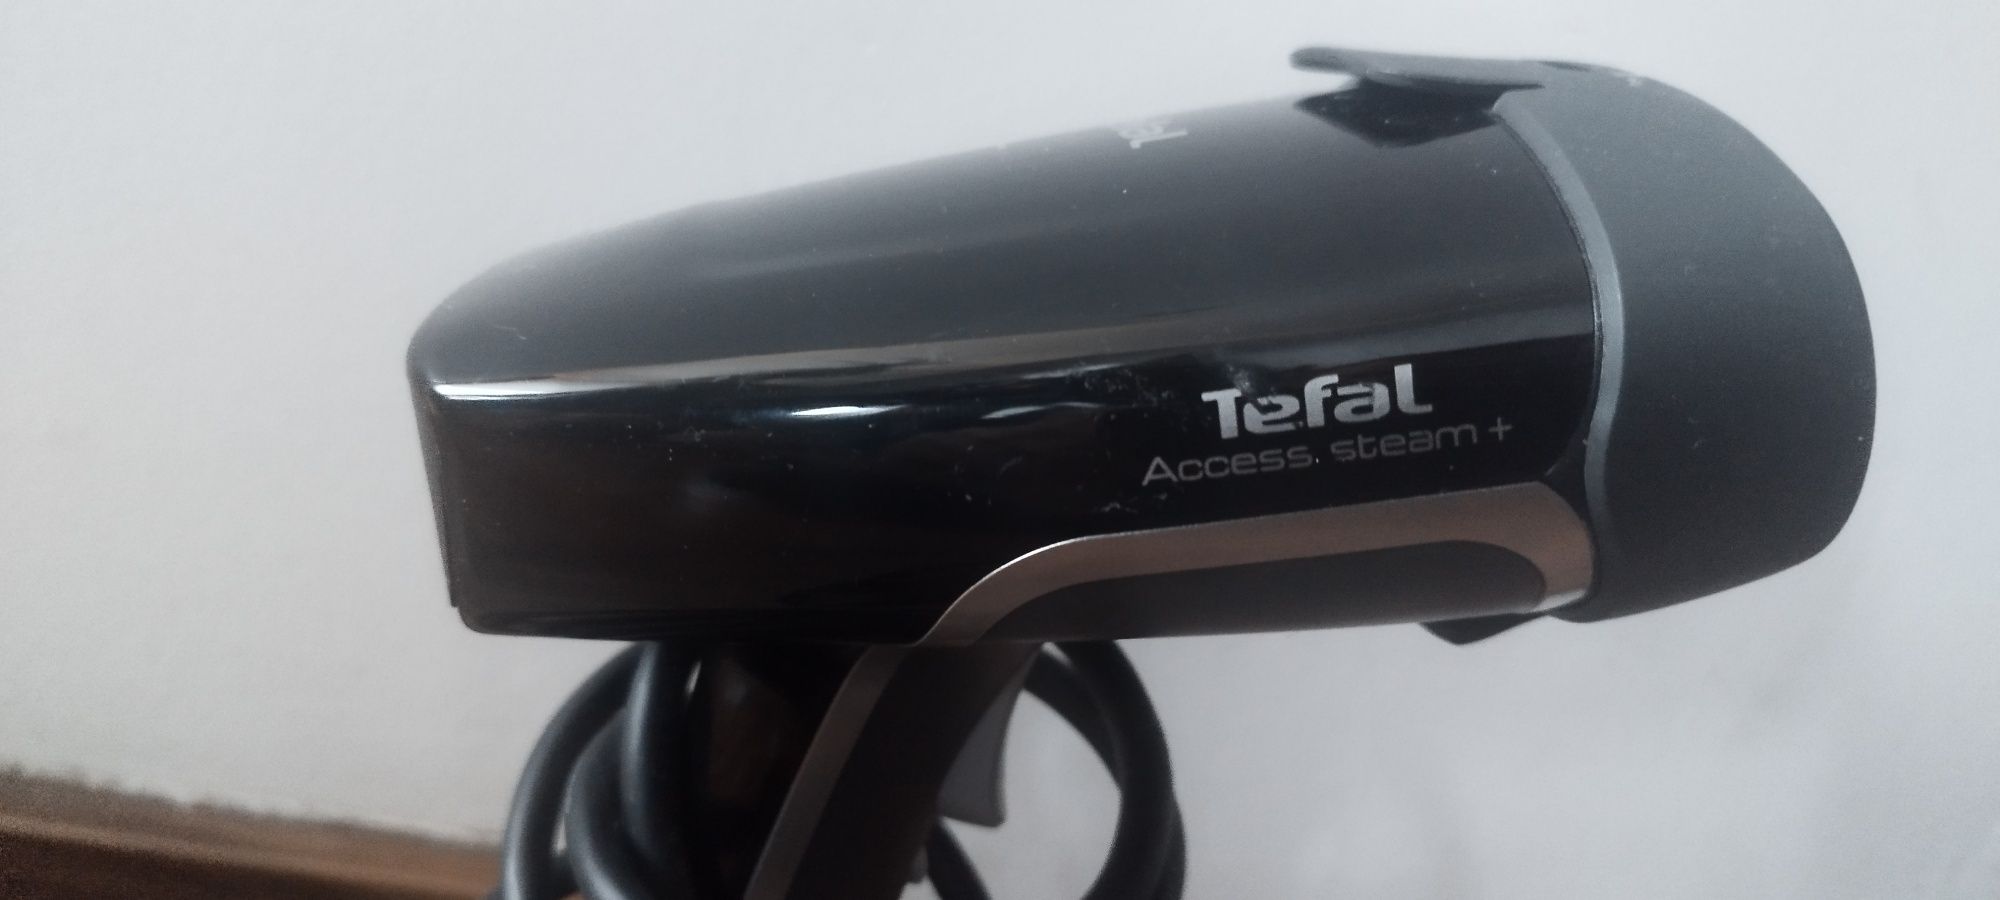 Parownica Steamer do ubrań Tefal Access steam+  DT8150